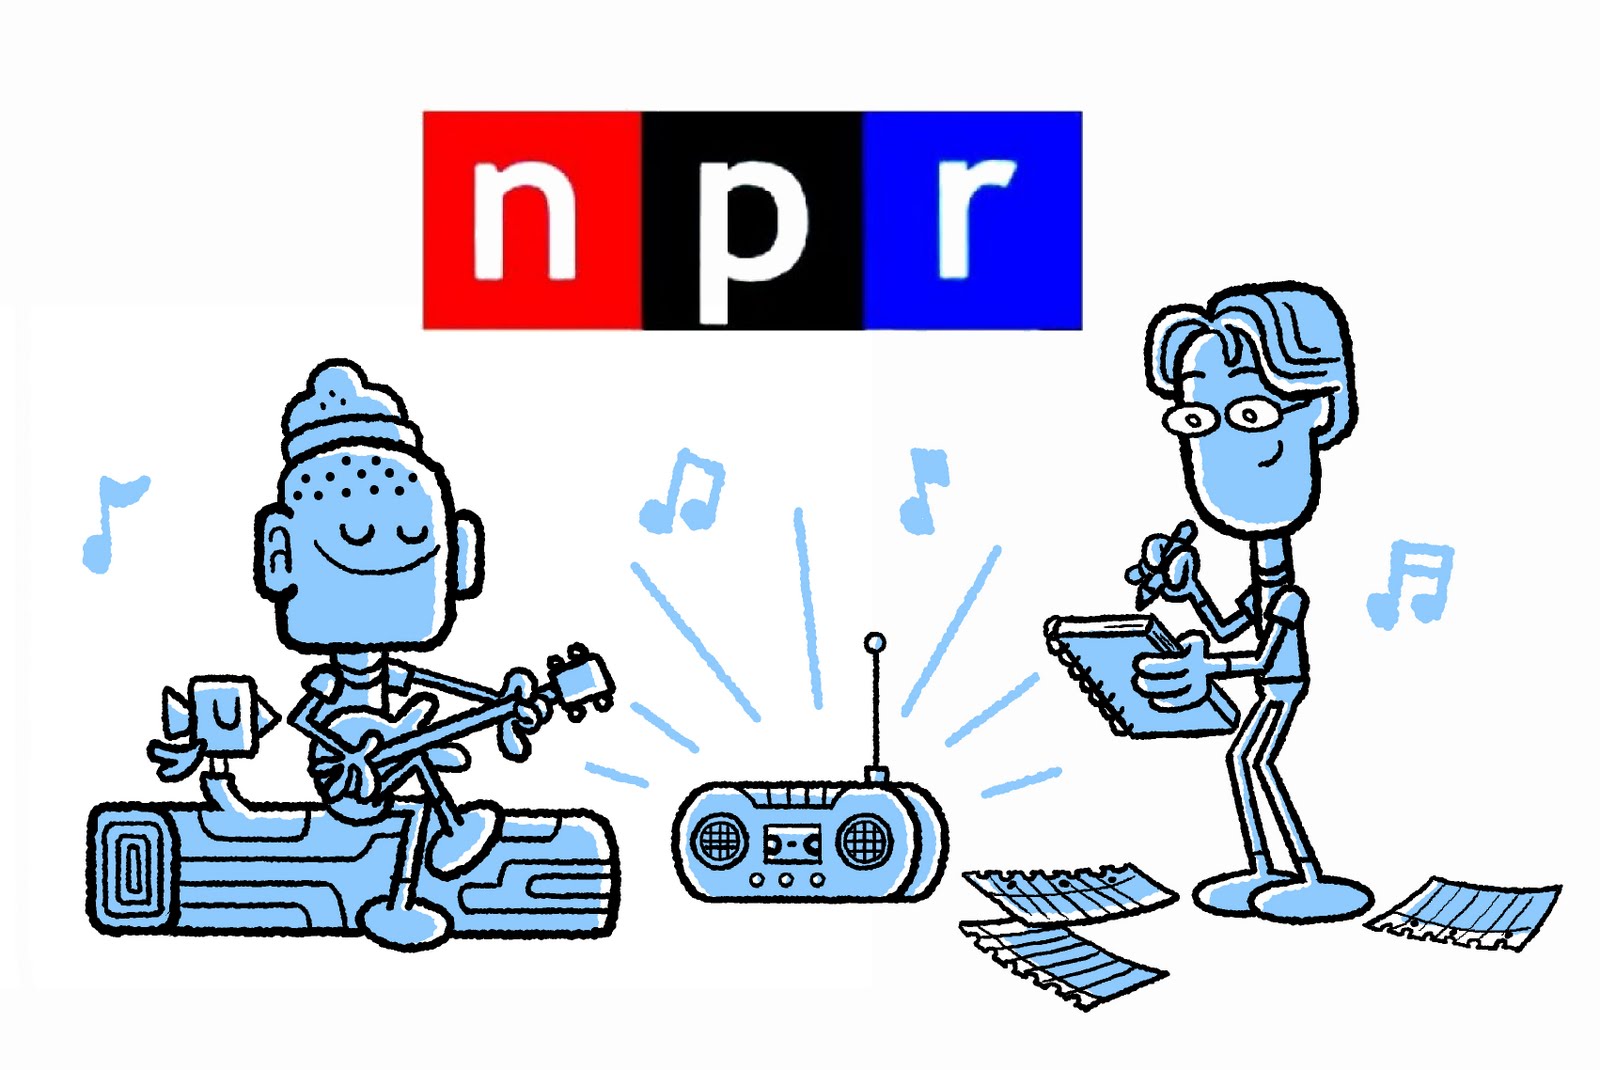 NPR singing